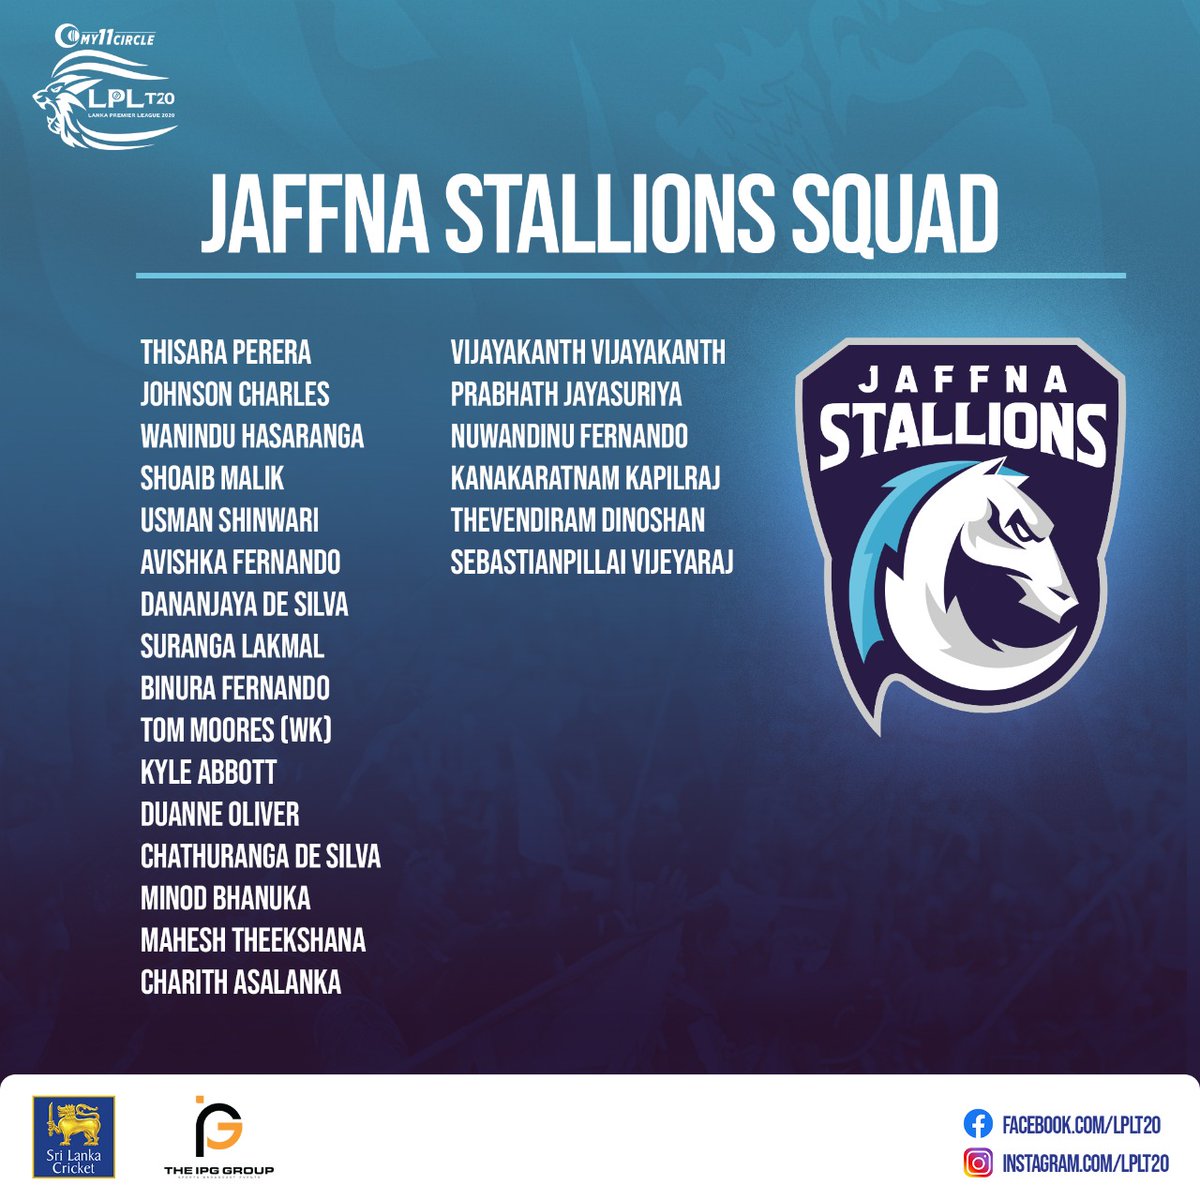 Jaffna Stallions squad for Lanka Premier League 2020